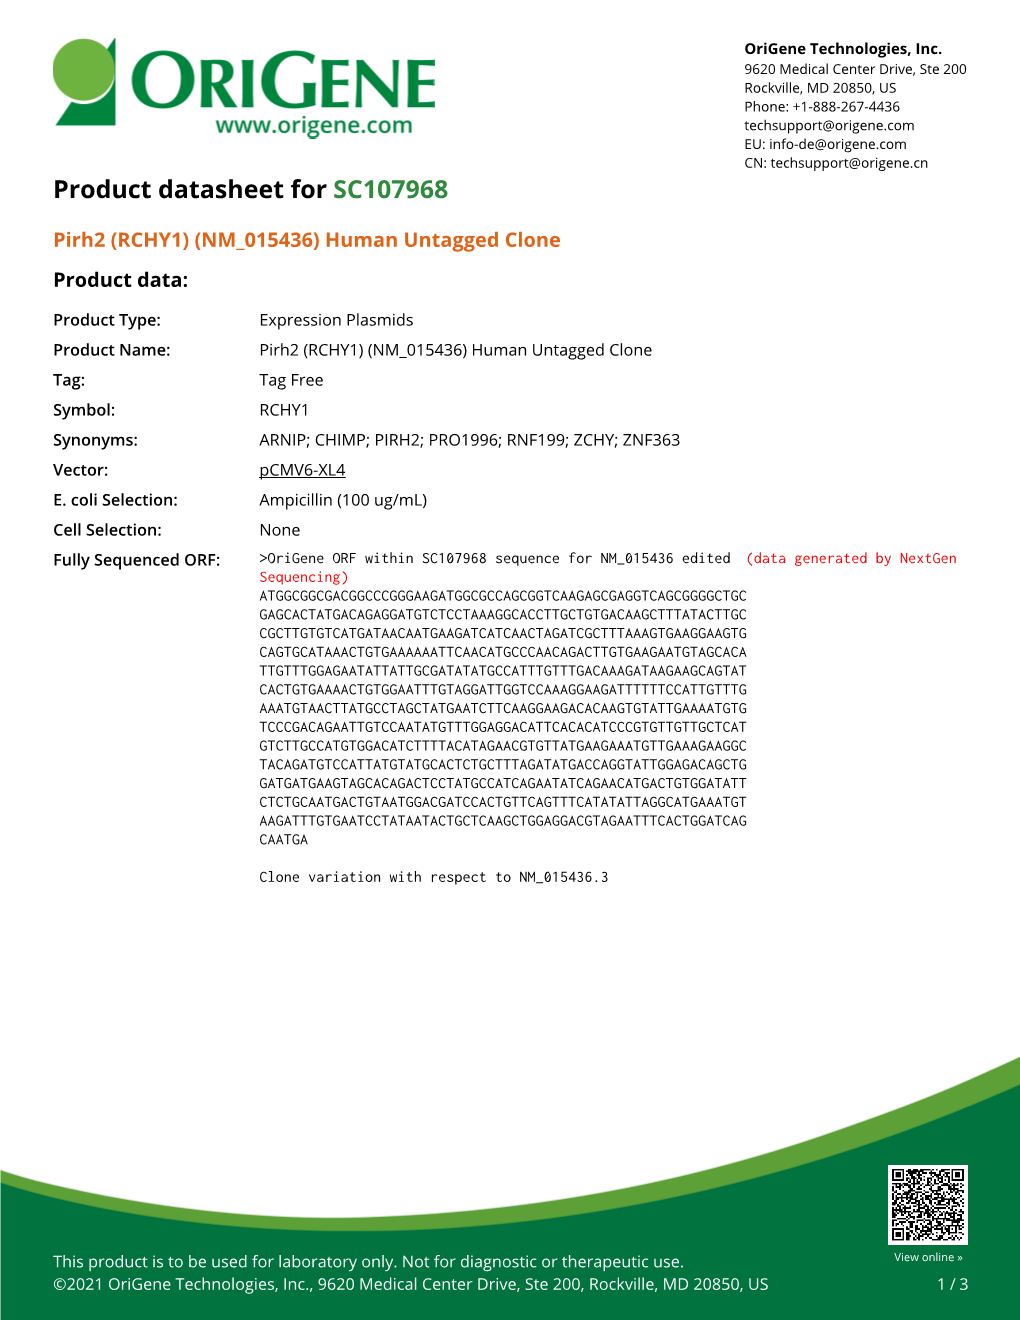 Pirh2 (RCHY1) (NM 015436) Human Untagged Clone Product Data